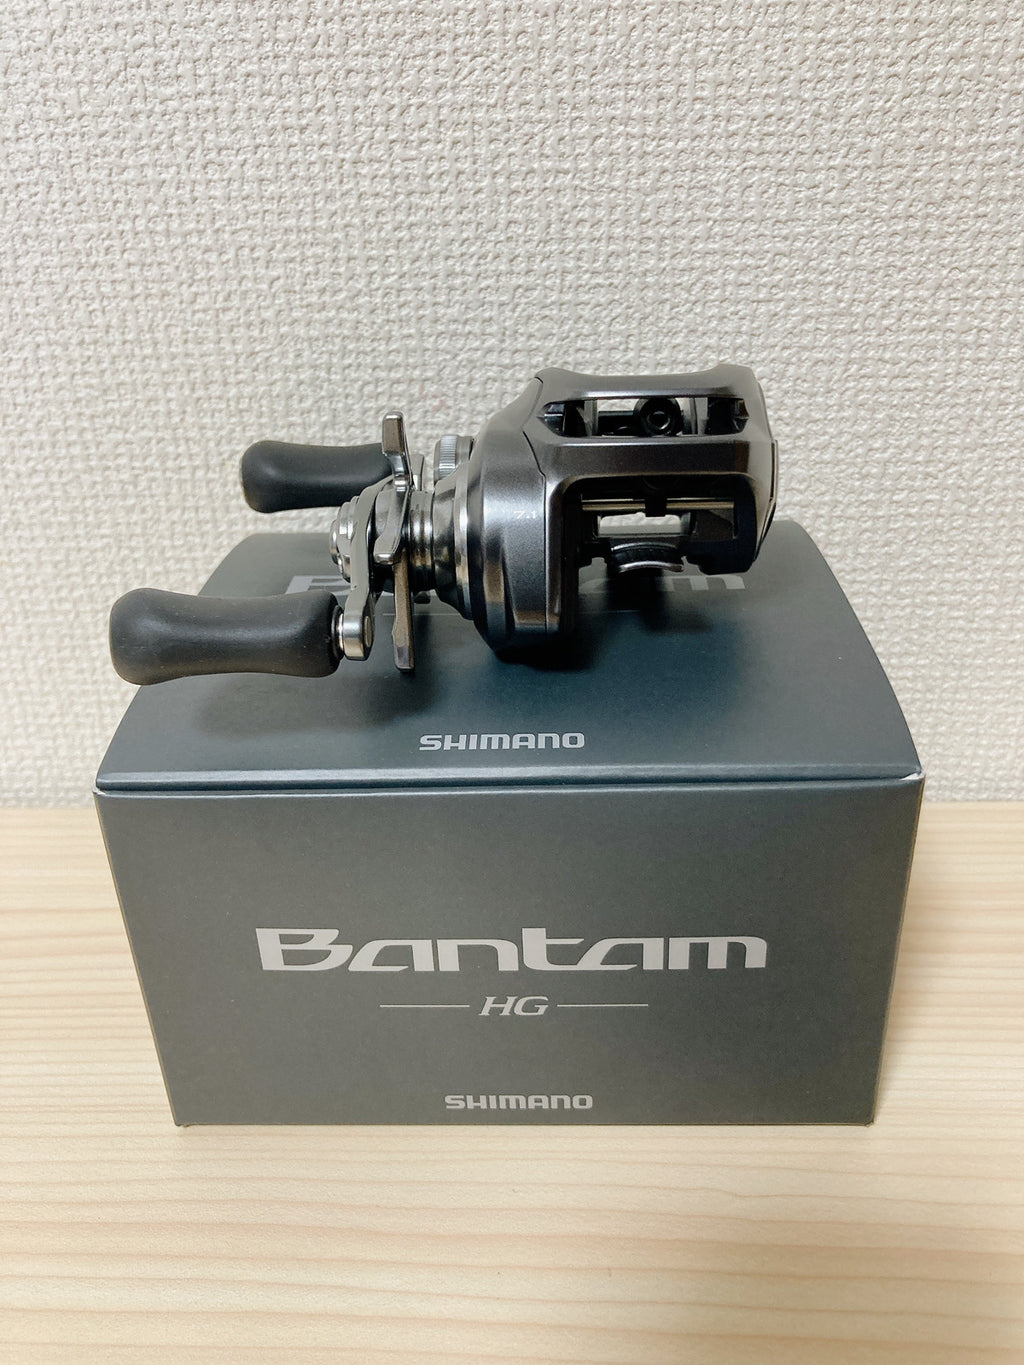 Shimano Baitcasting Reel 22 Bantam HG RIGHT Gear Ratio 7.1:1 Fishing Reel  IN BOX